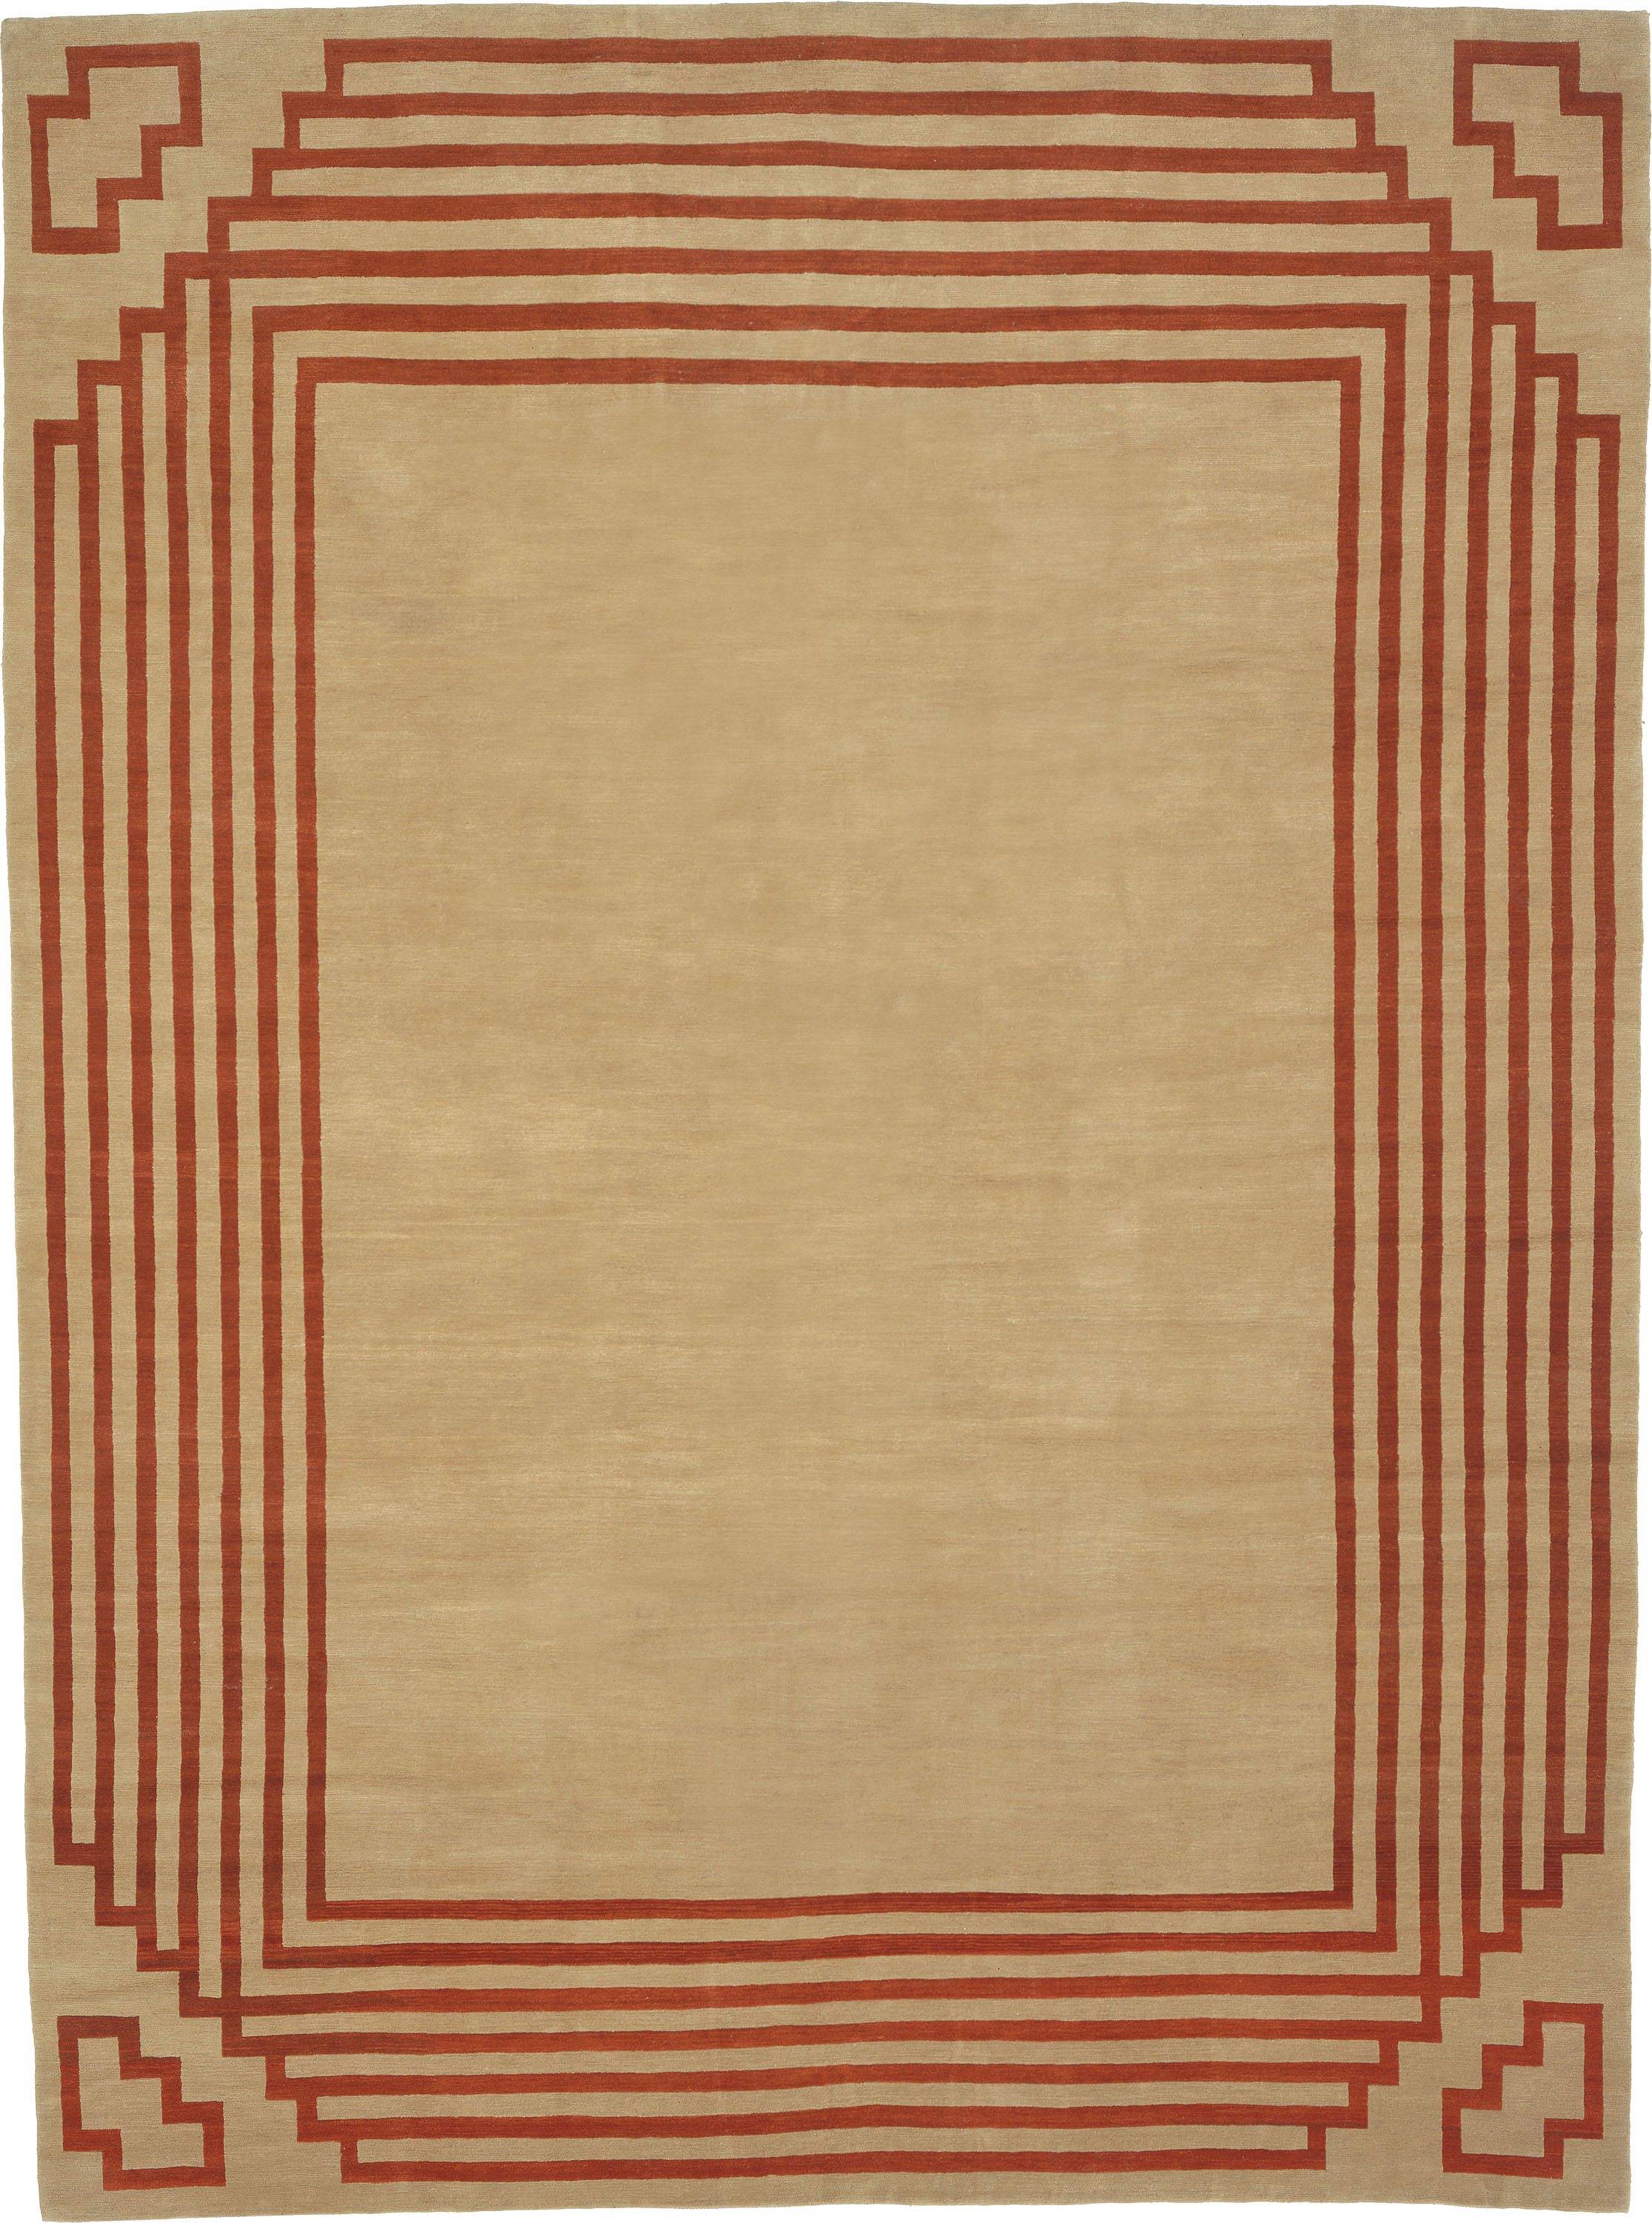 16035 Deco Border Design | Custom Modern & 20th Century Design Carpet | FJ Hakimian | Carpet Gallery in NYC